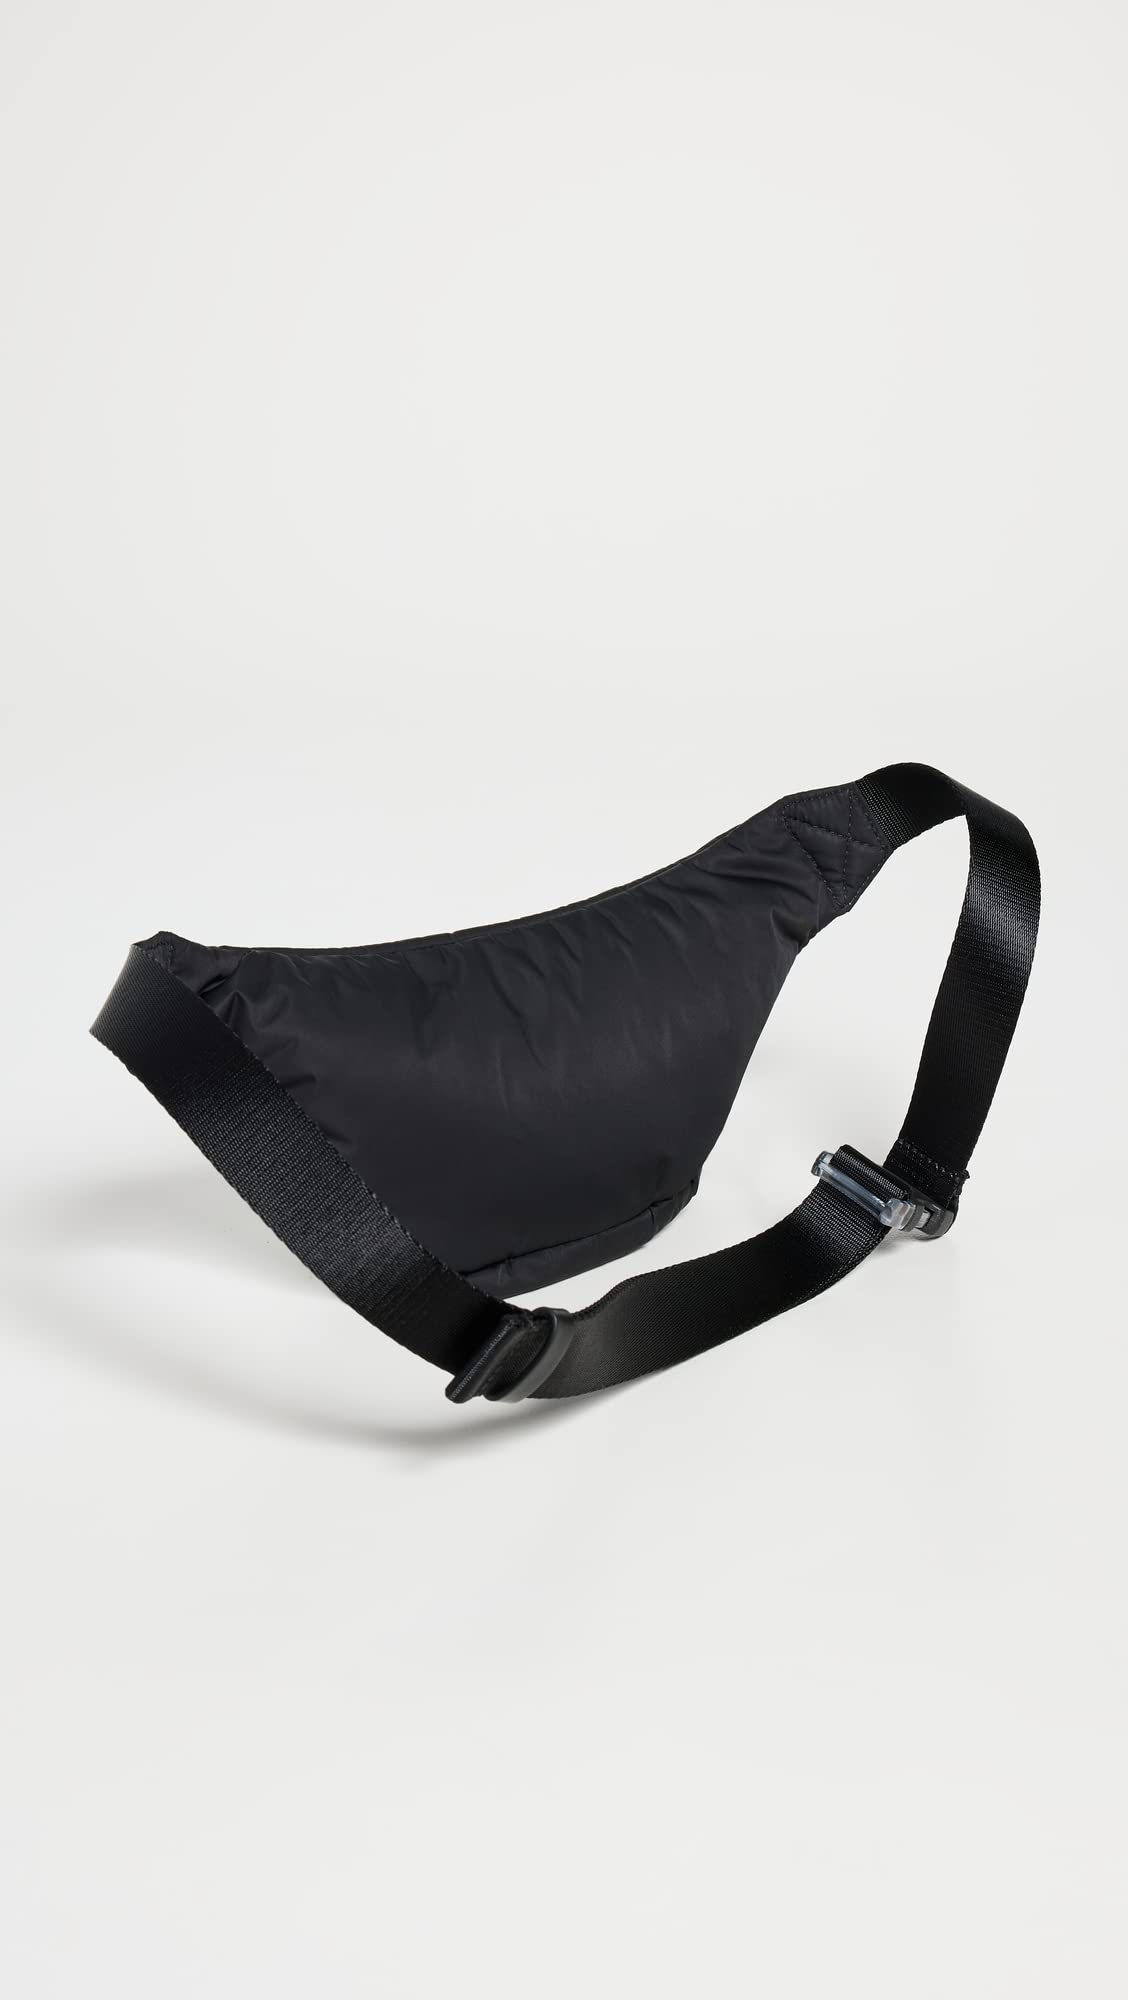 See by Chloe Women's Joy Rider Belt Bag, Black, One Size